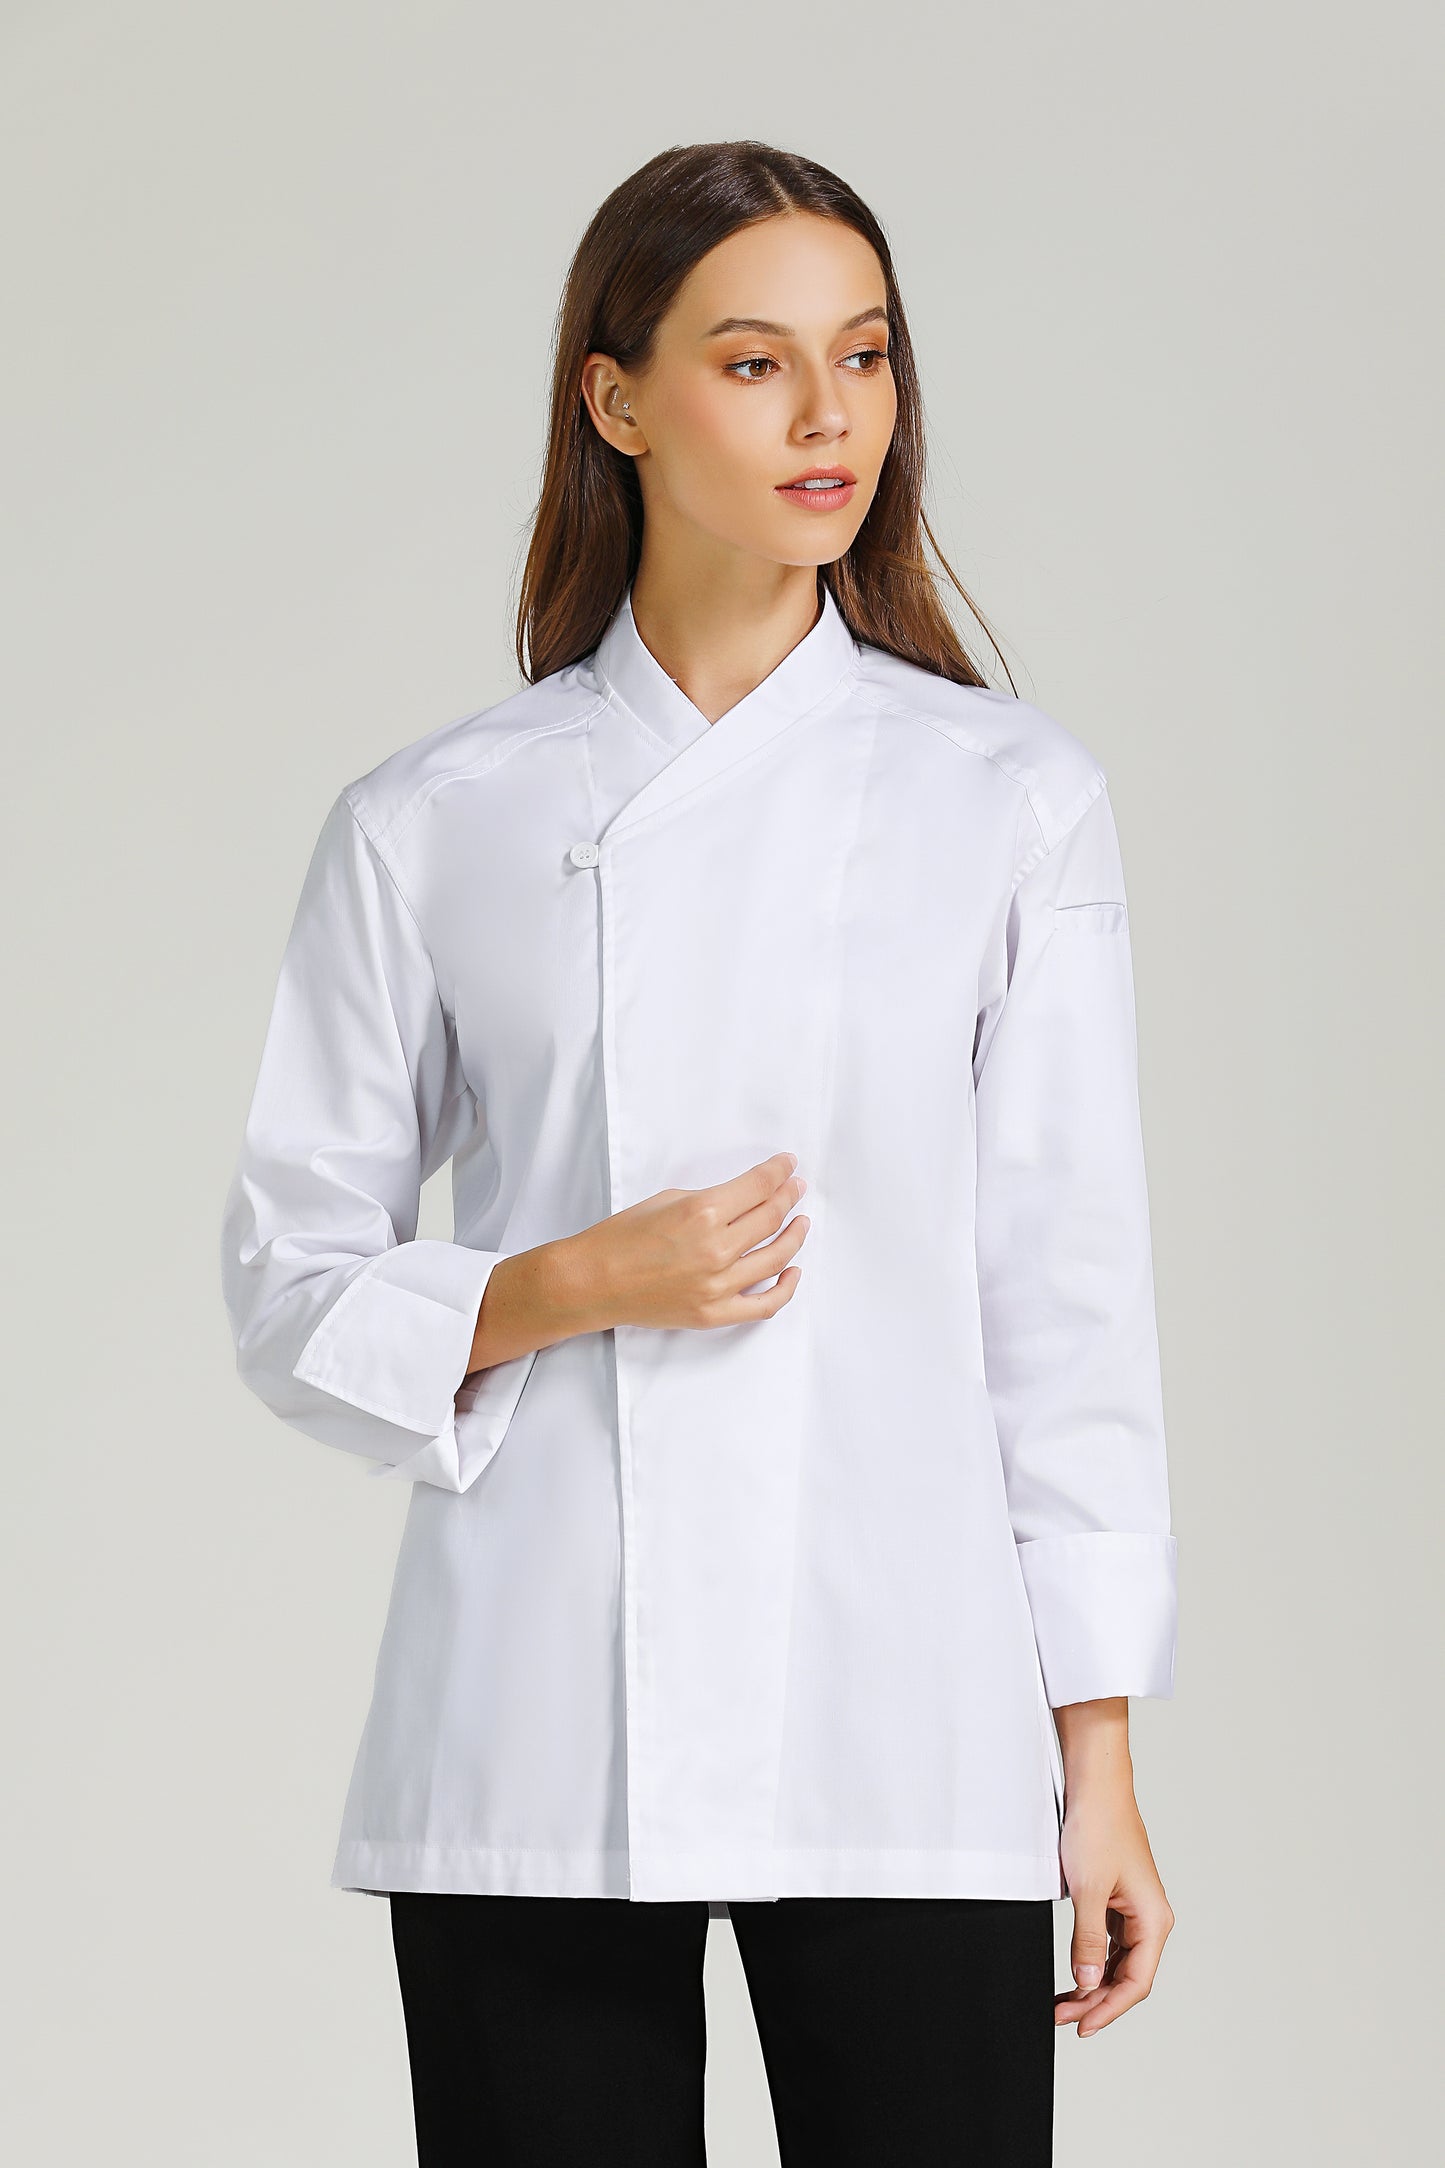 Tarragon White Chef Jacket, Long Sleeve